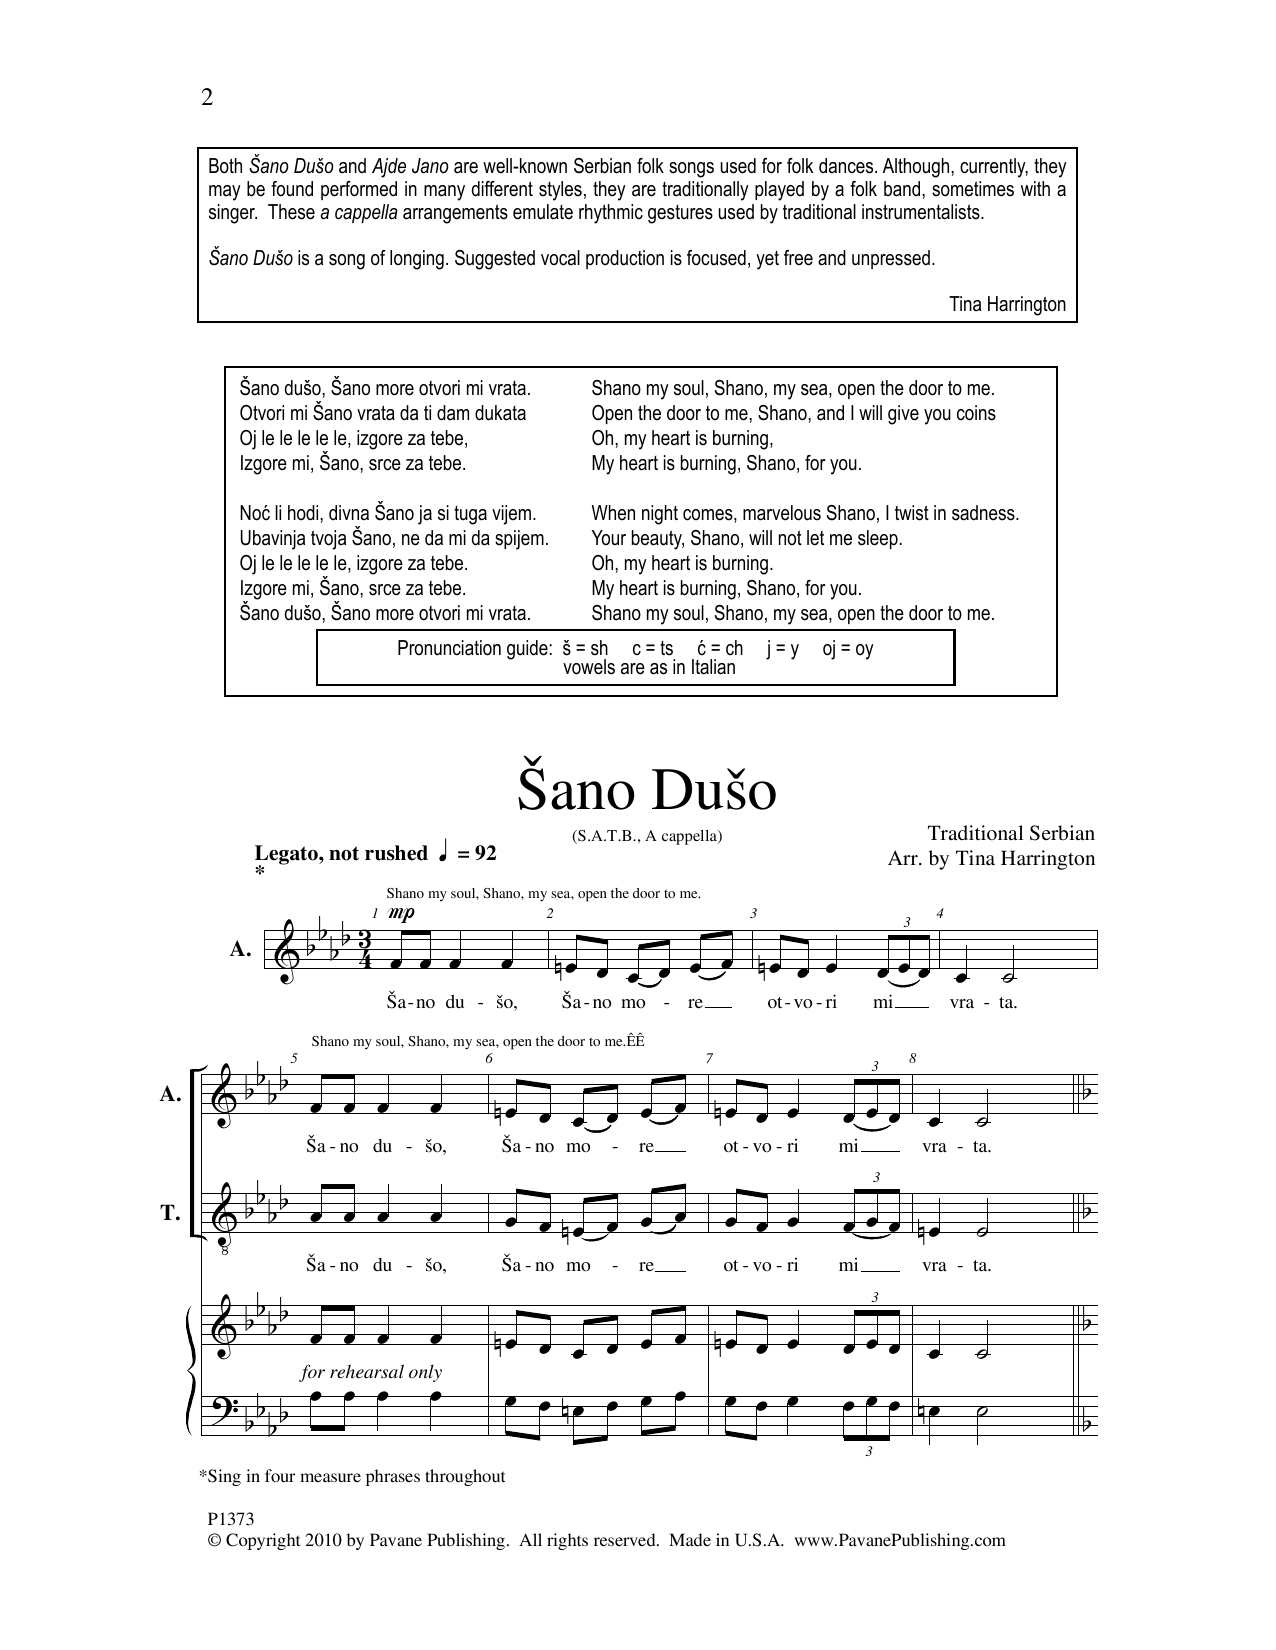 Tina Harrington Sano Duso Sheet Music Notes & Chords for SATB Choir - Download or Print PDF